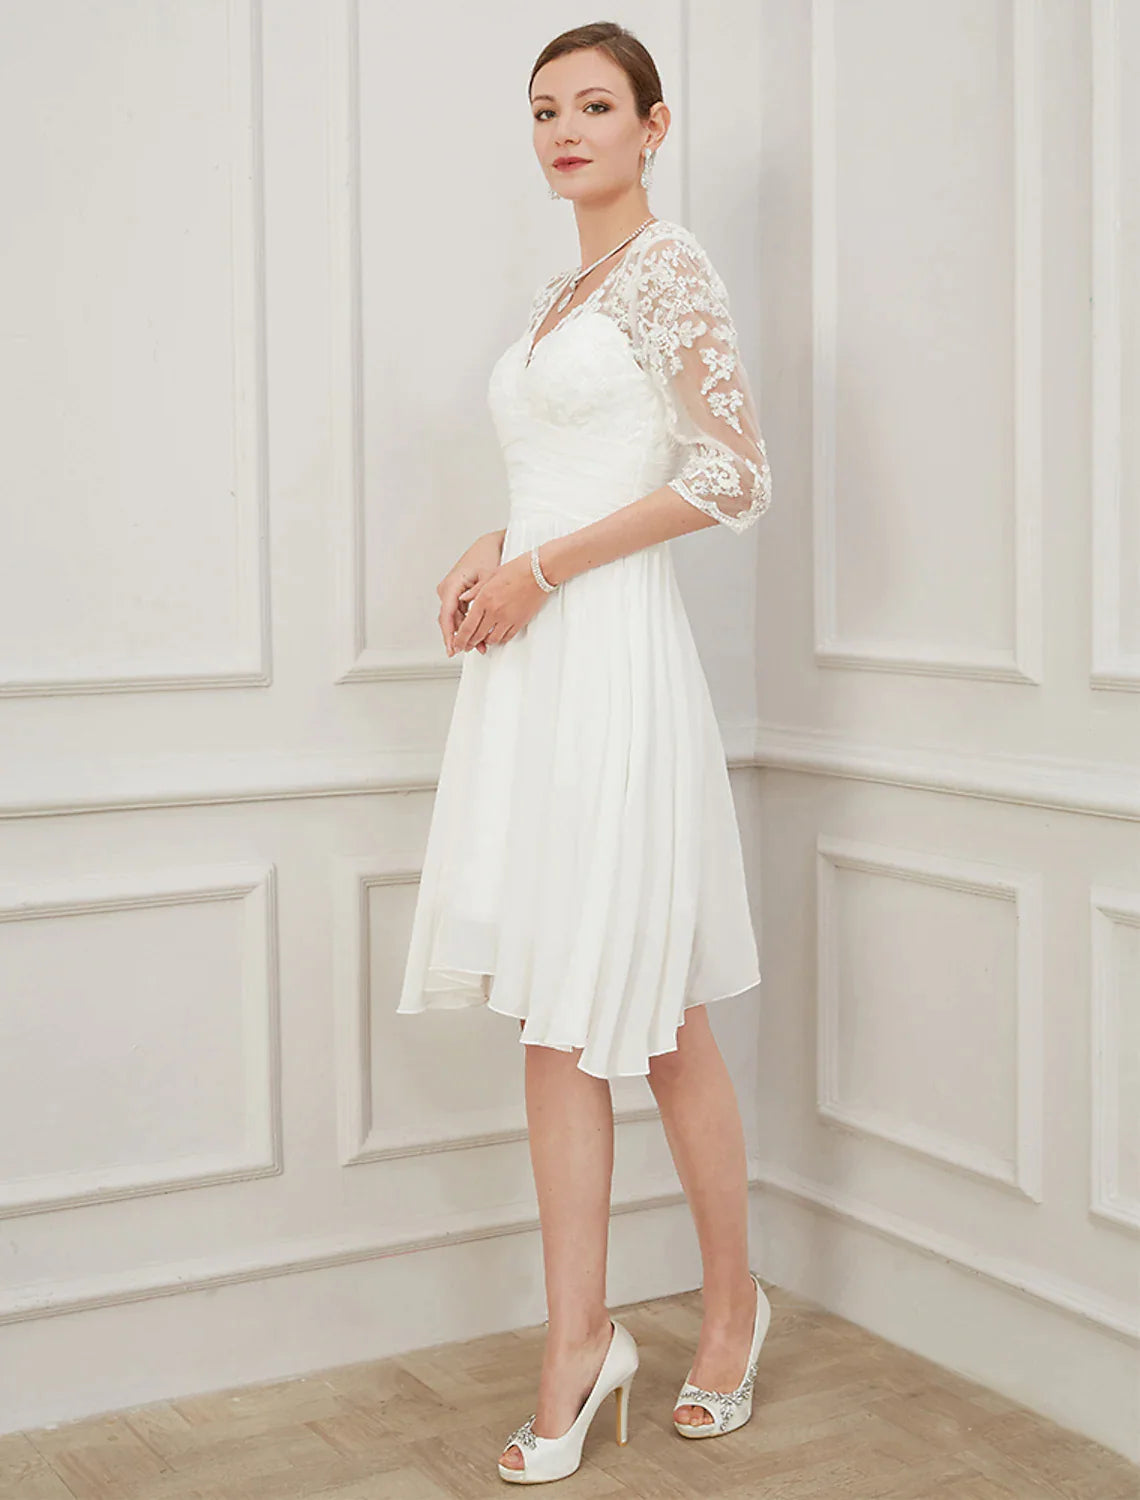 Bridal Little White Dresses Wedding Dresses Knee Length A-Line Half Sleeve V Neck Chiffon Draping Appliques